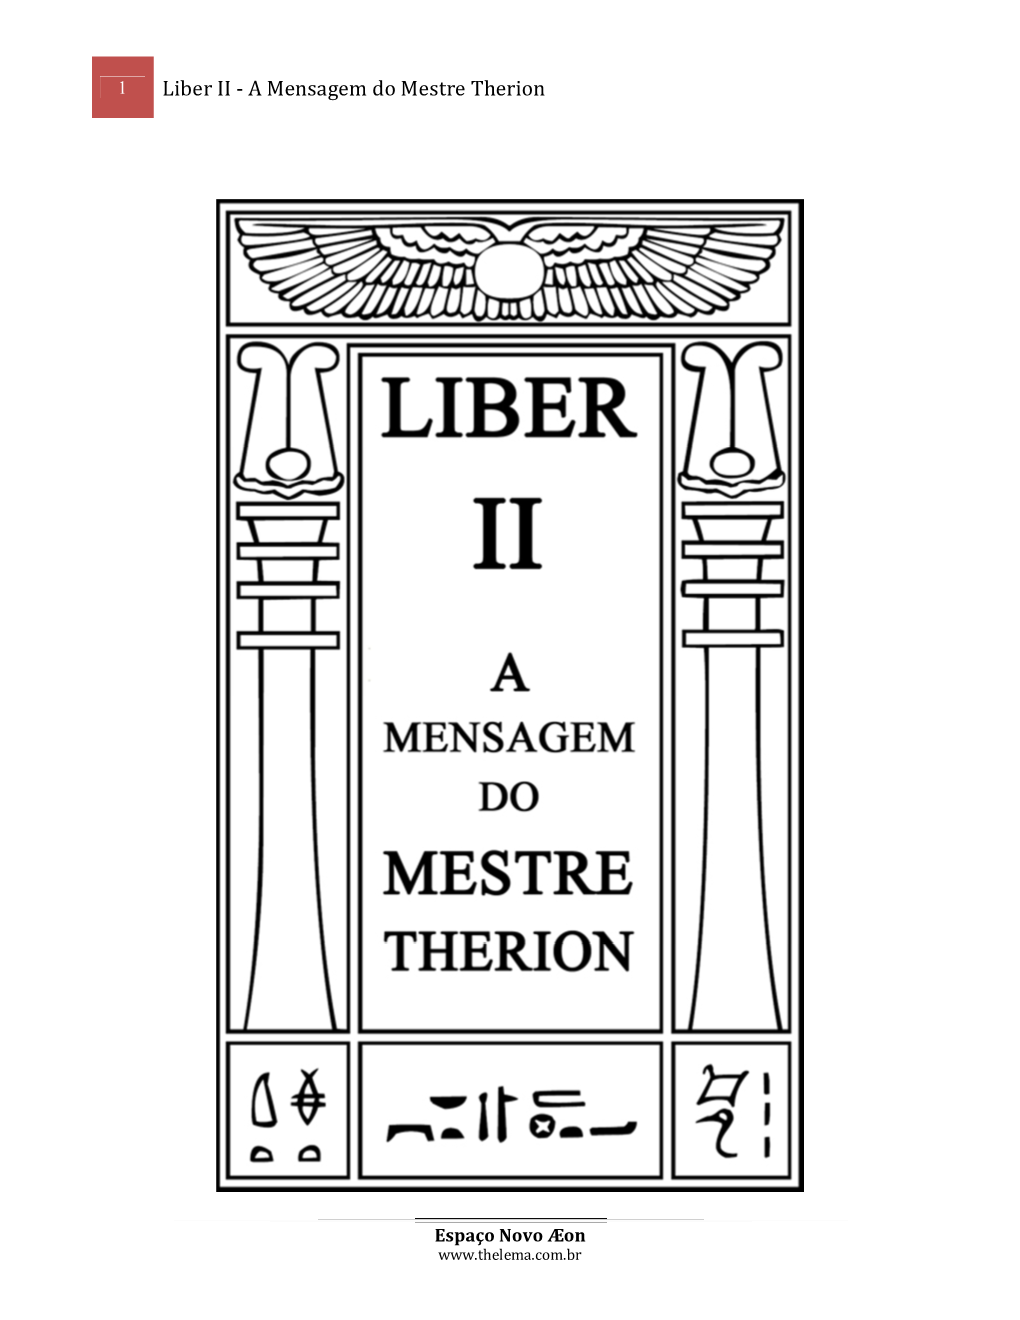 Liber II - a Mensagem Do Mestre Therion